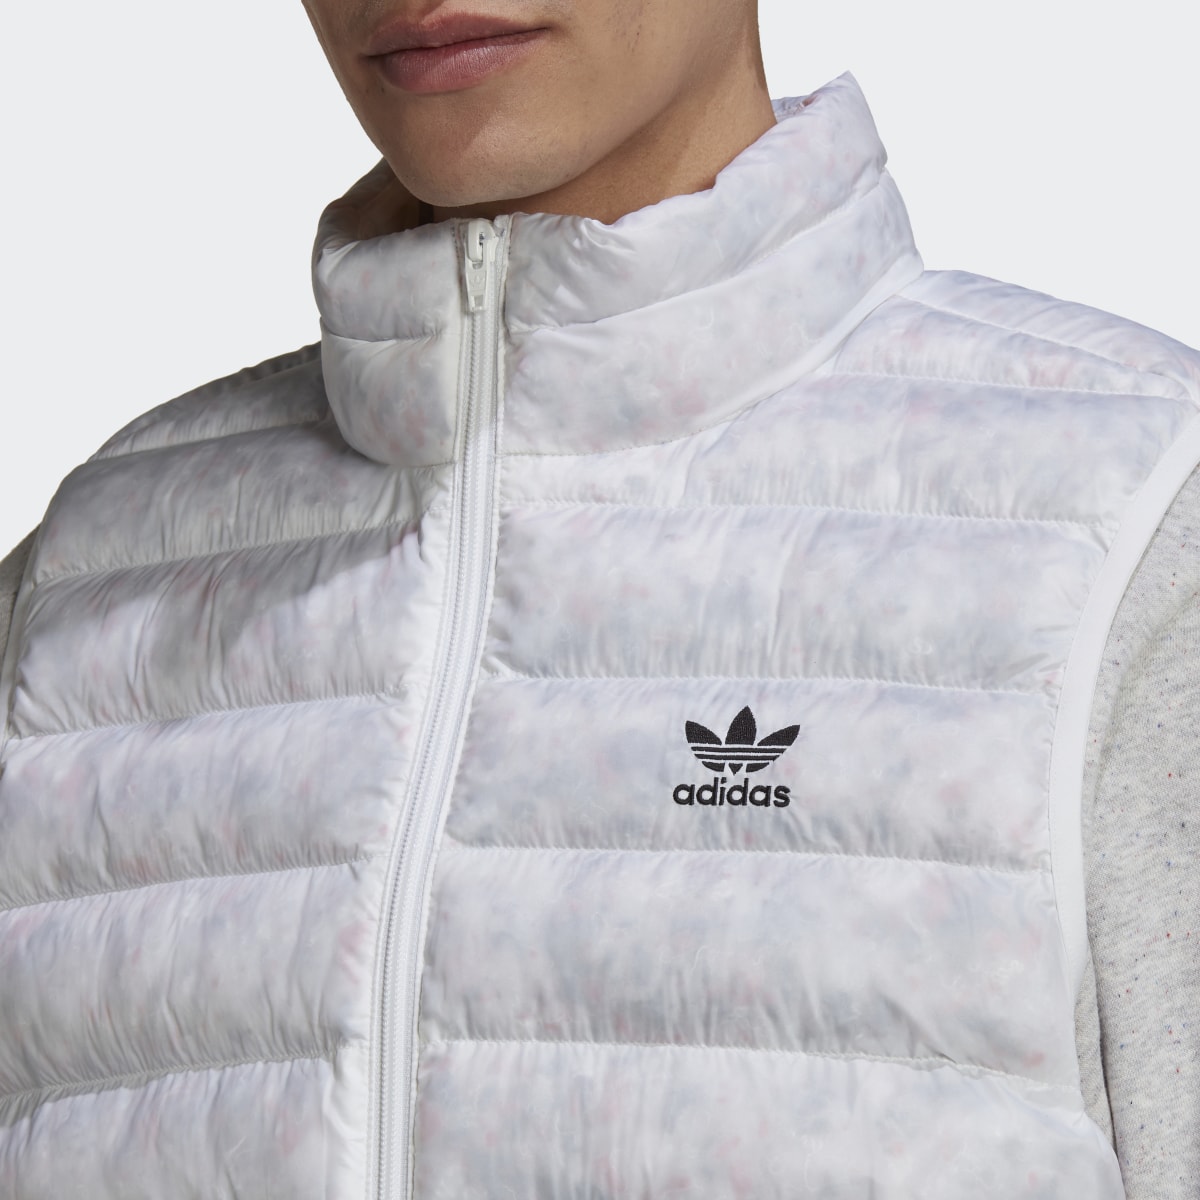 Adidas Essentials+ Made with Nature Vest. 9